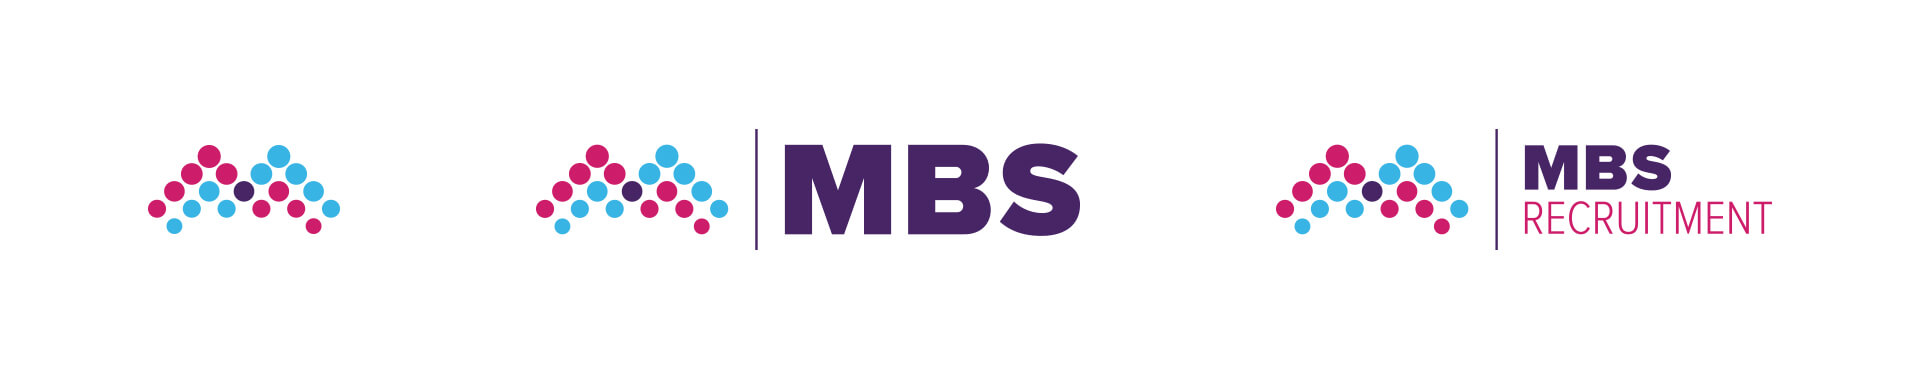 MBS Recruitment Branding Logo Design Variations